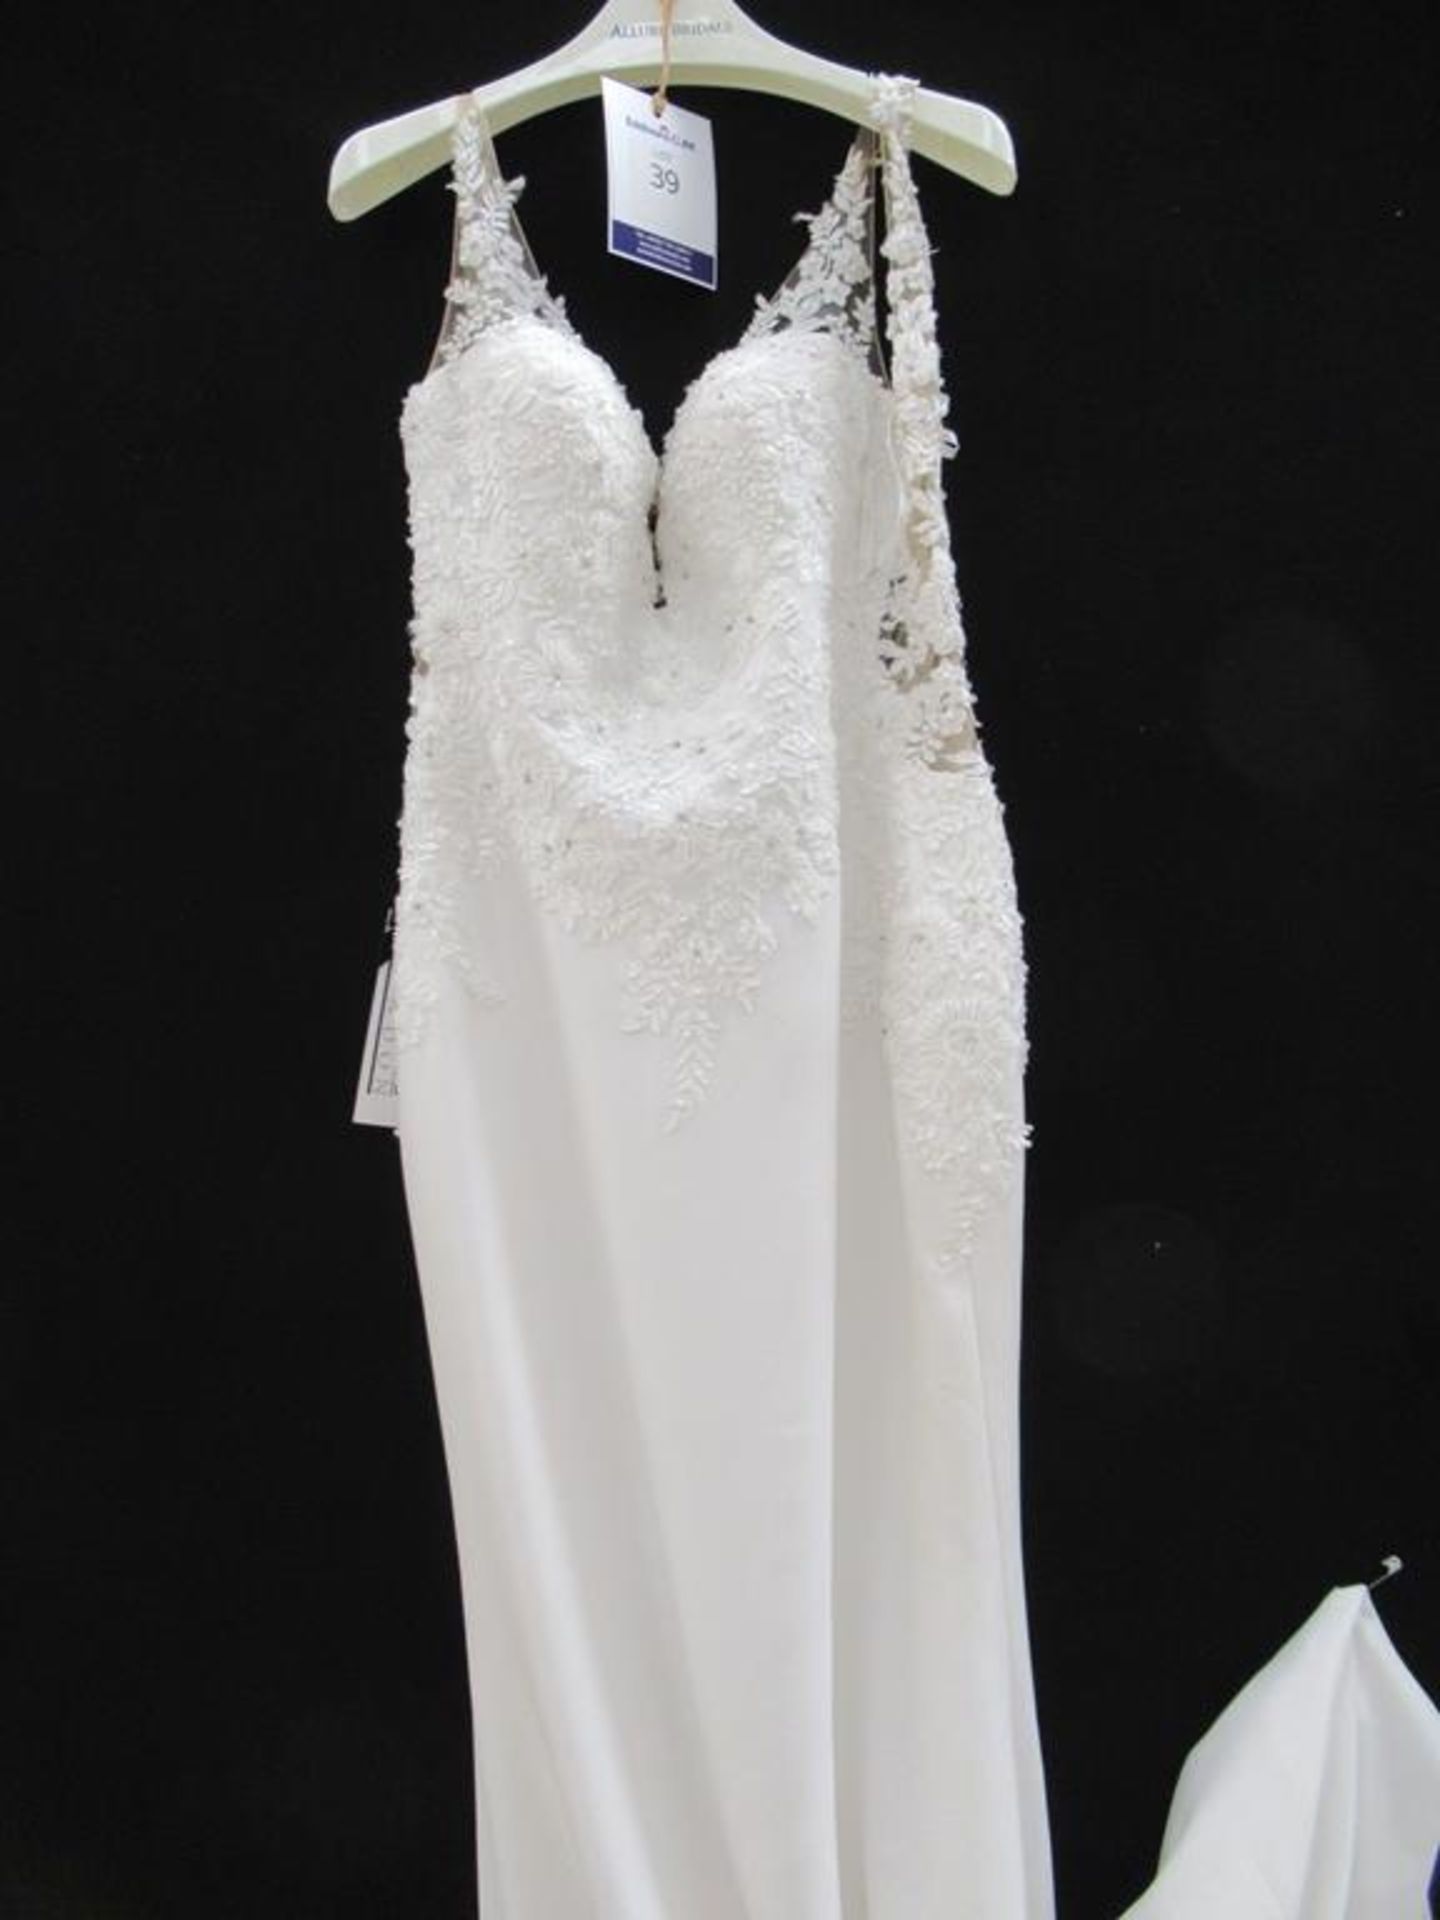 DandoLondon 'Desire' wedding dress - Image 2 of 3